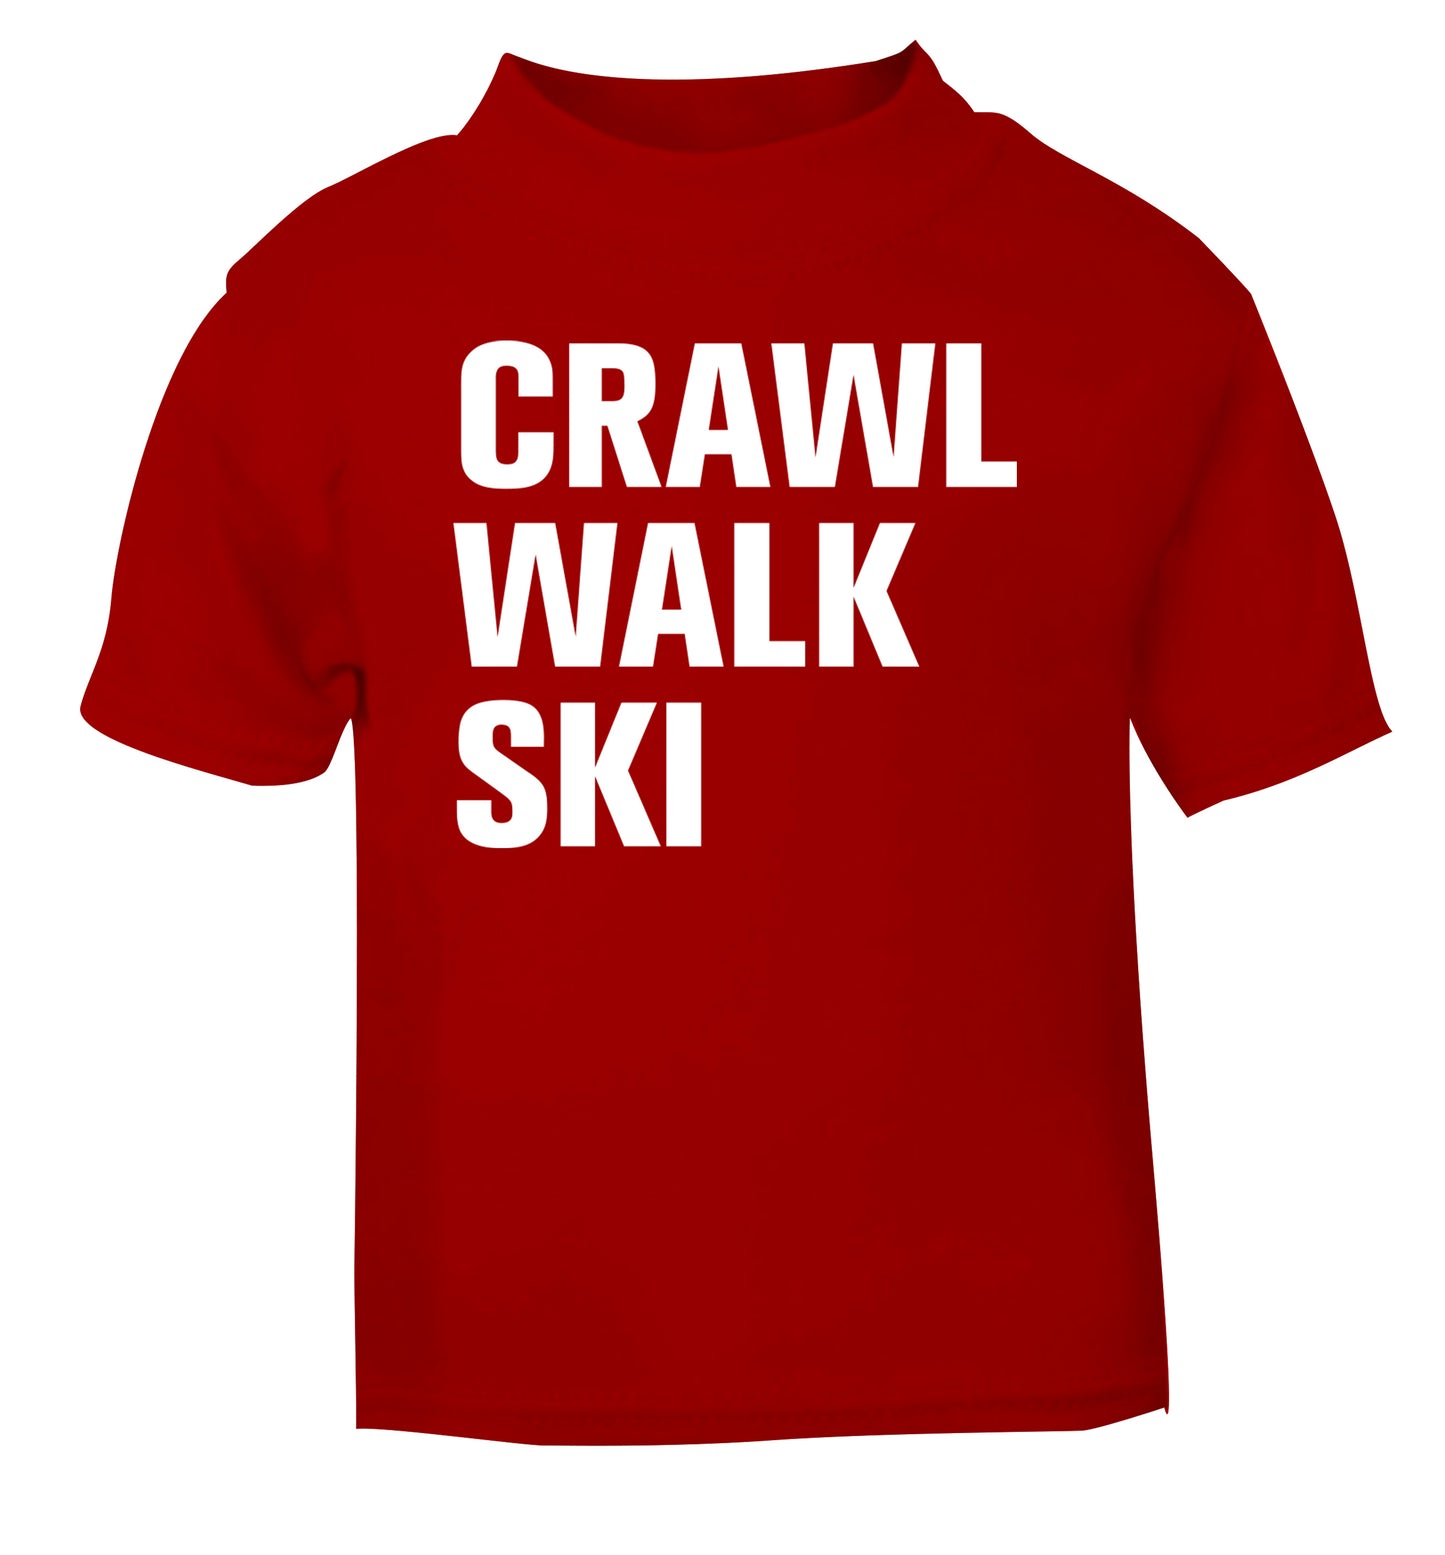 Crawl walk ski red Baby Toddler Tshirt 2 Years